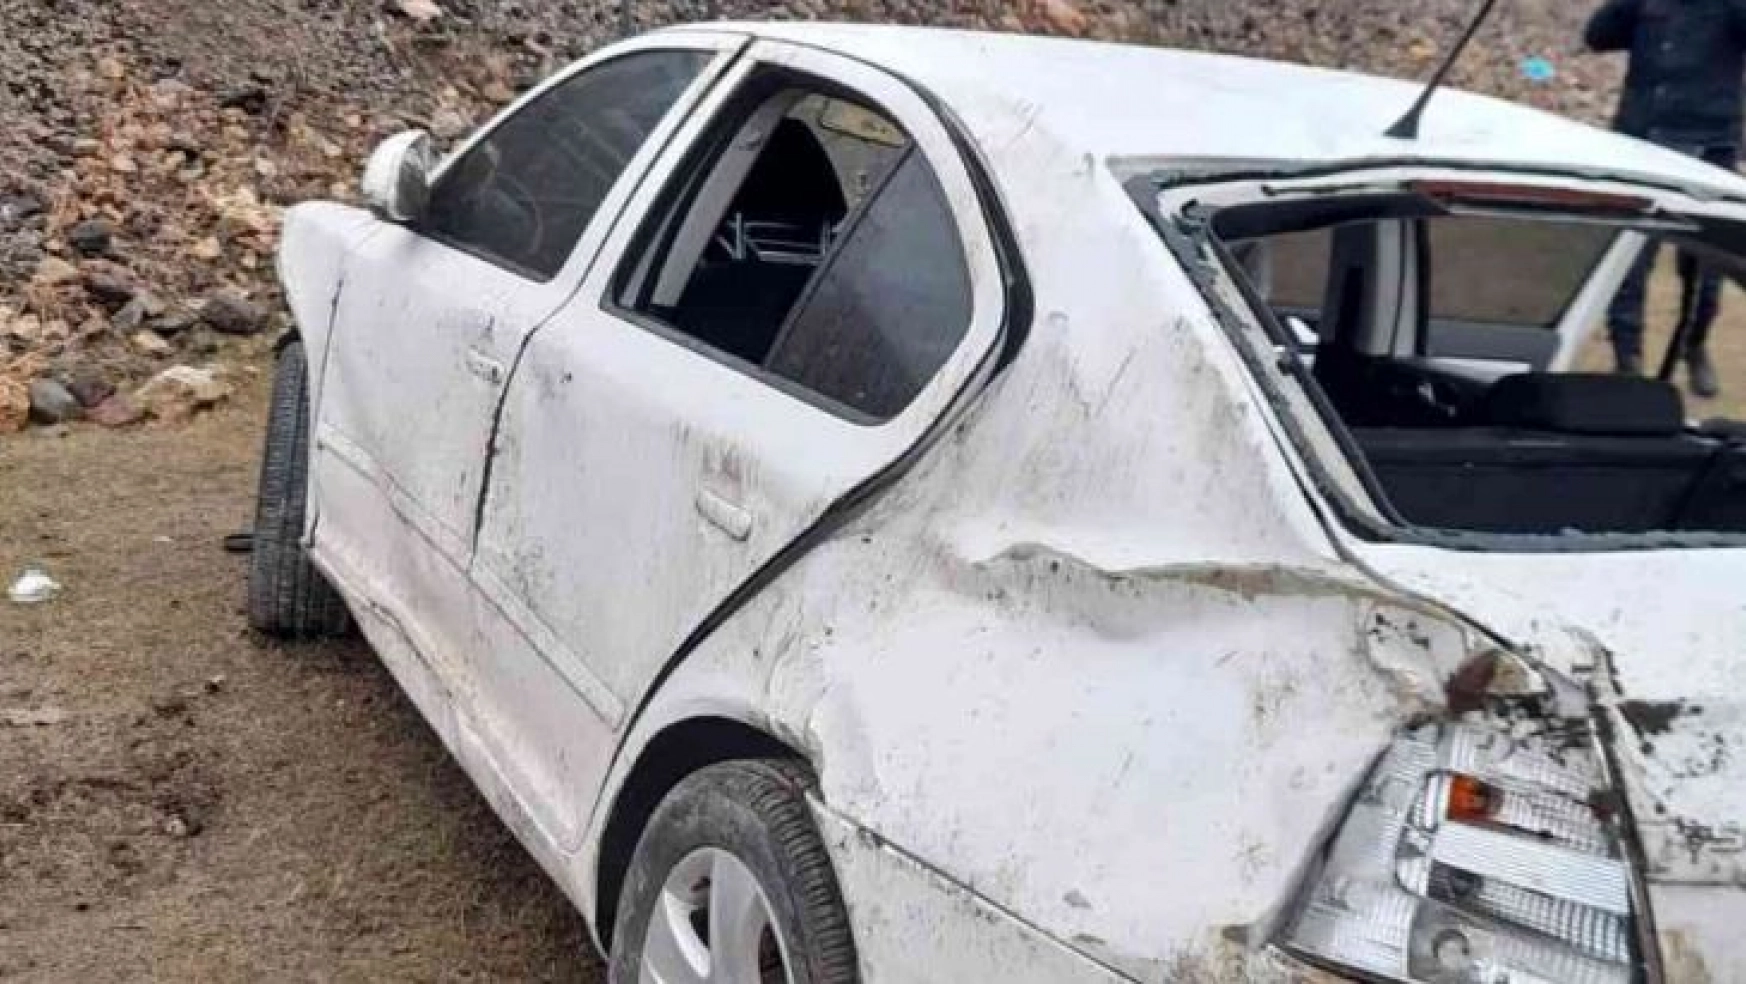 Bingöl'de otomobil şarampole yuvarlandı: 1 yaralı